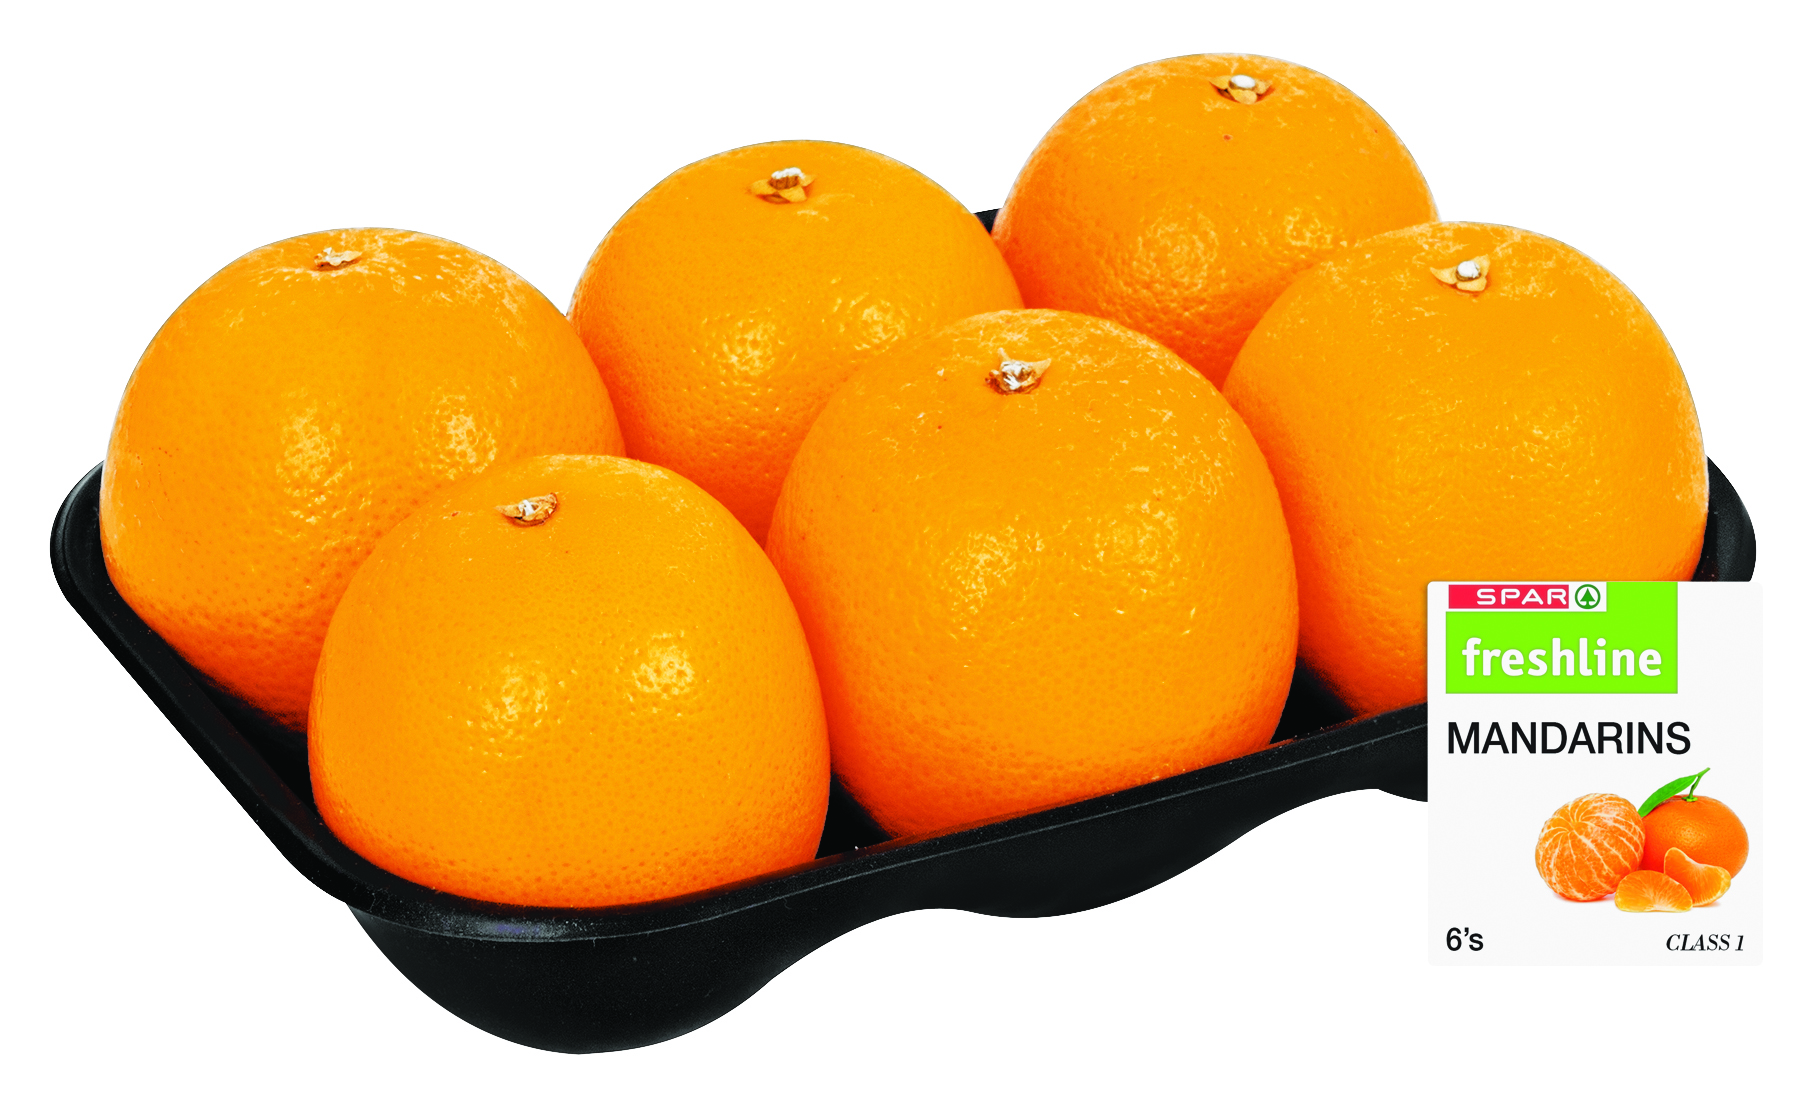 freshline mandarins